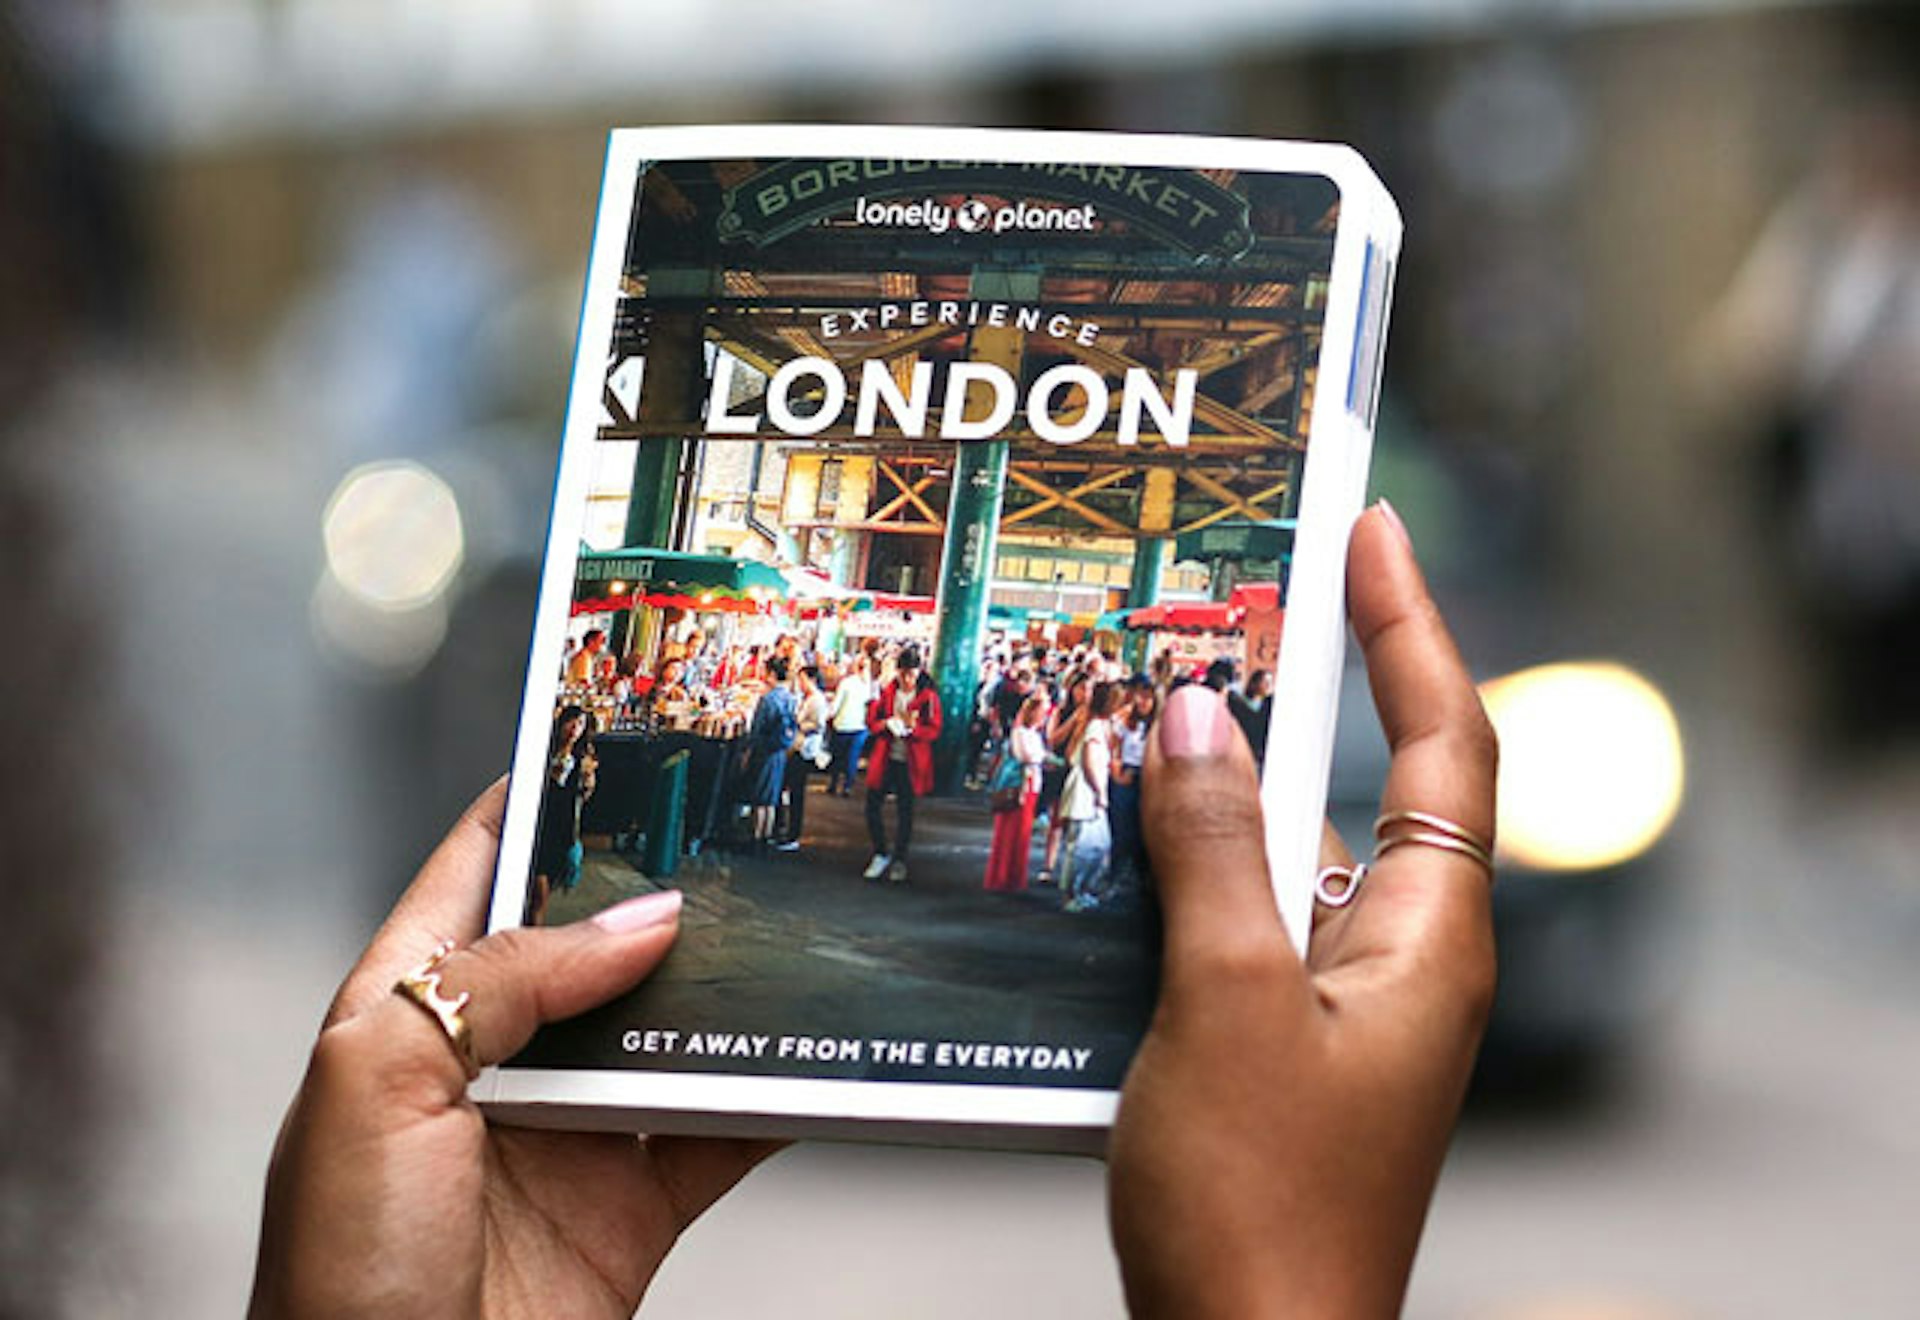 Experience London
Experience London